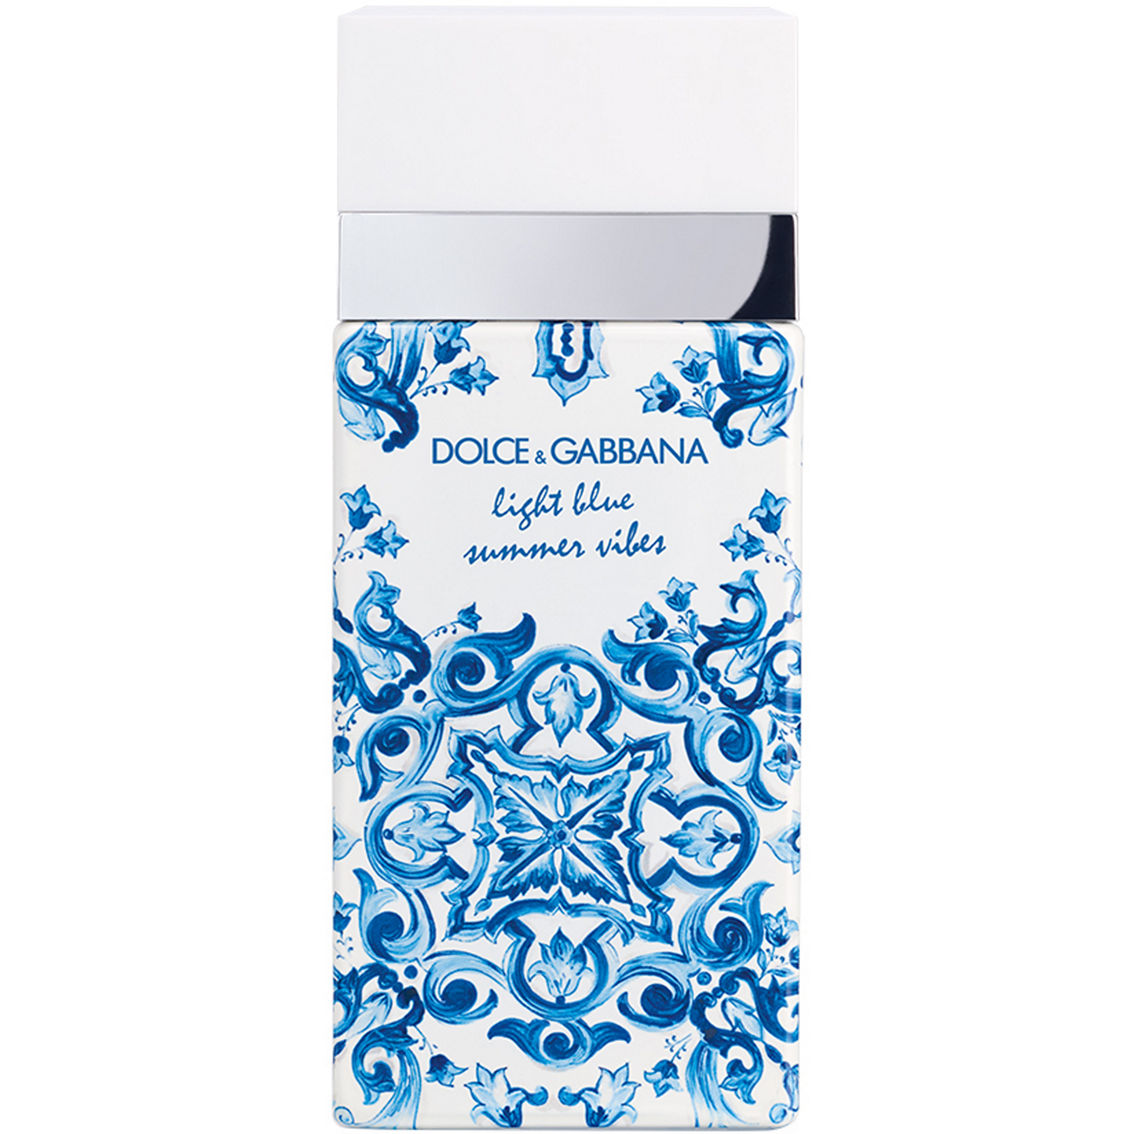 Dolce & Gabbana Light Blue Summer Vibes For Women Eau De Toilette Spray ...